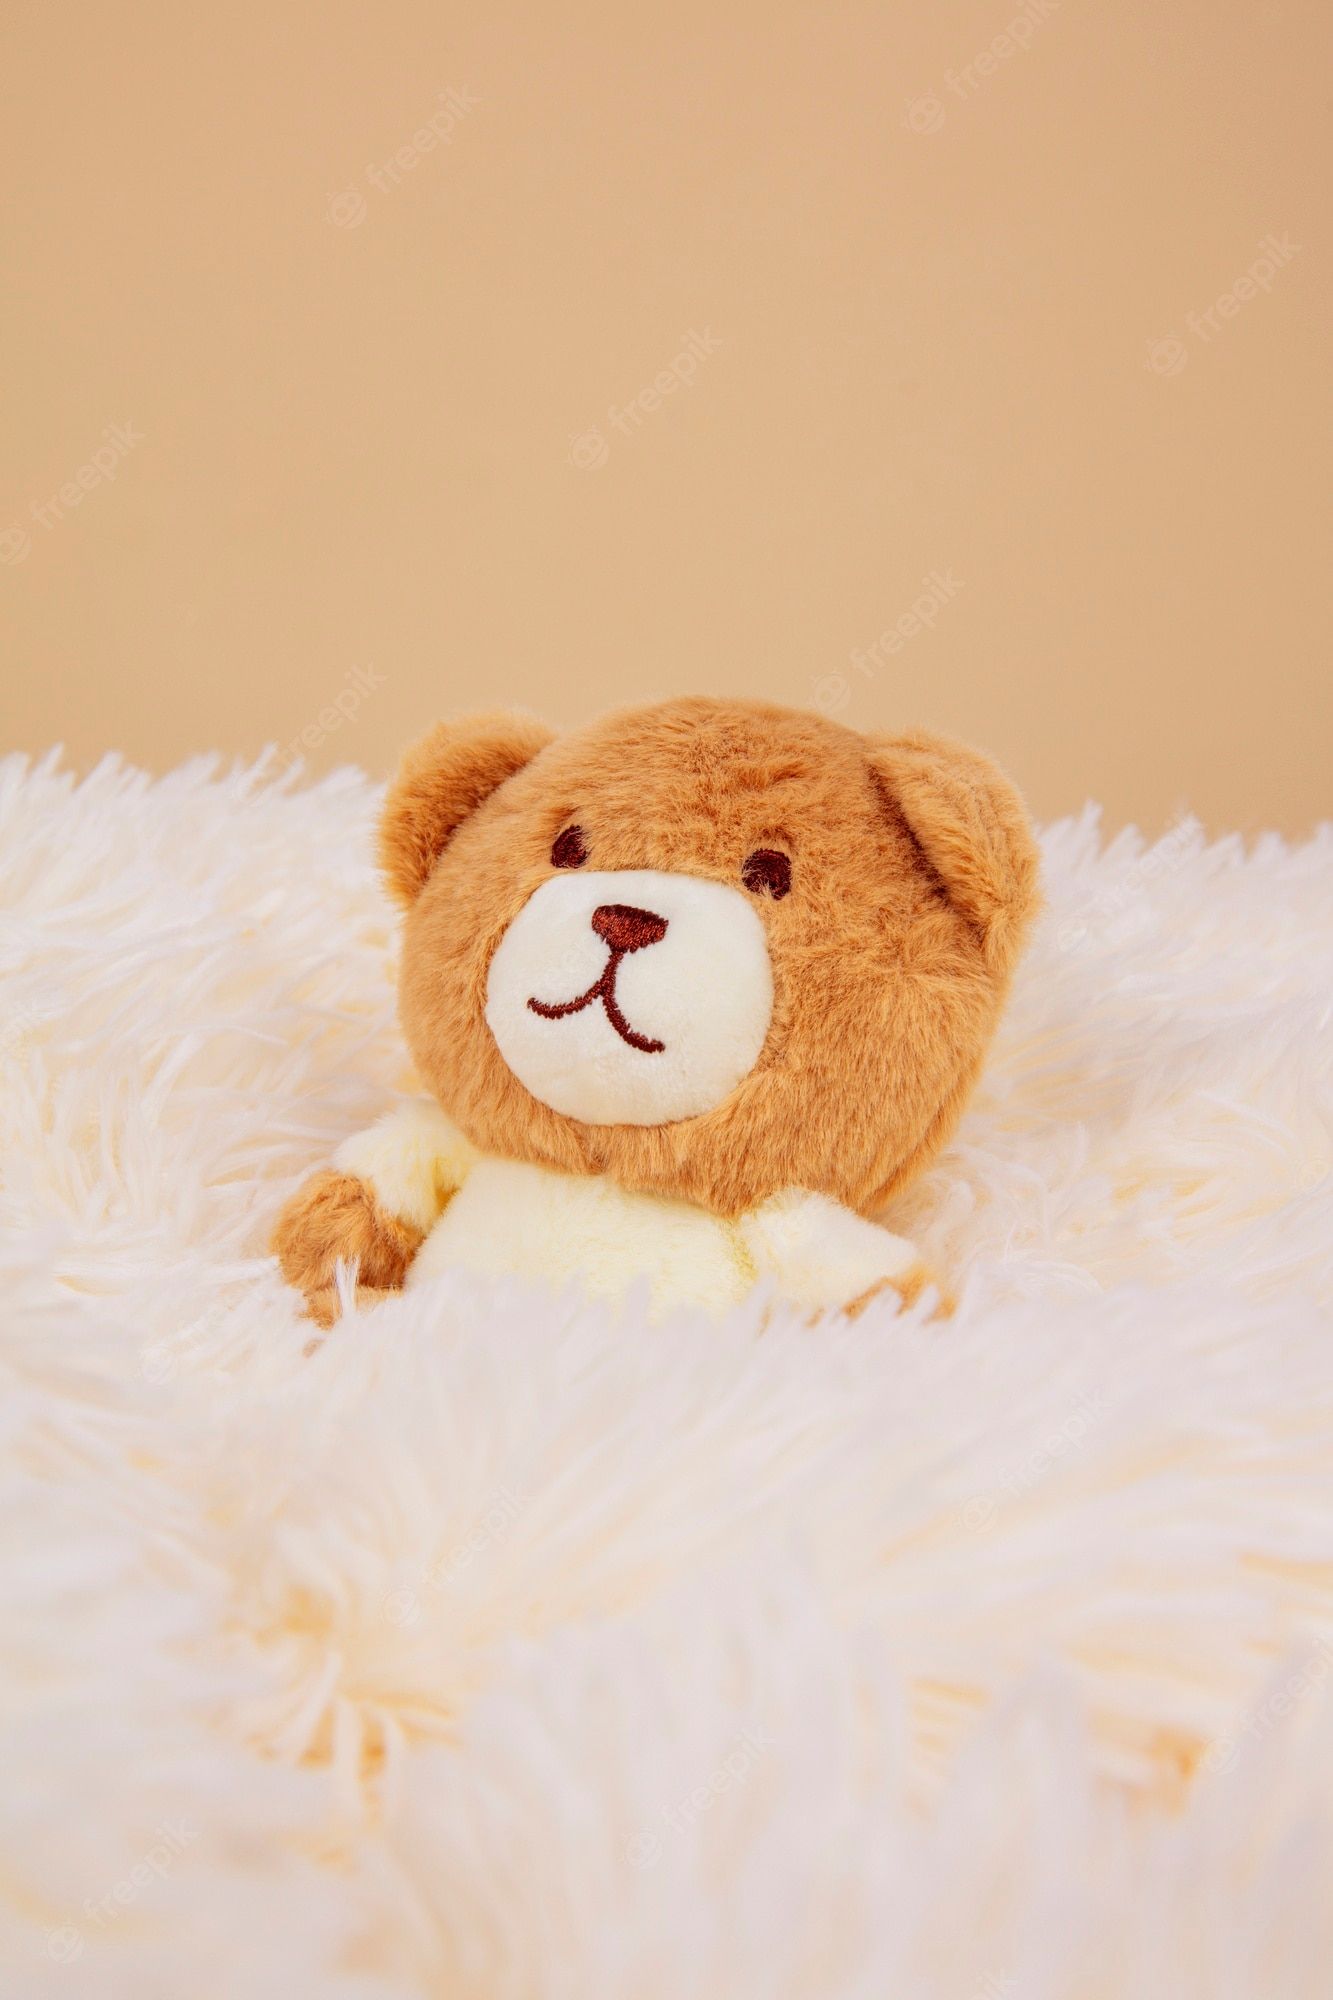 Cute Teddy Bear Picture